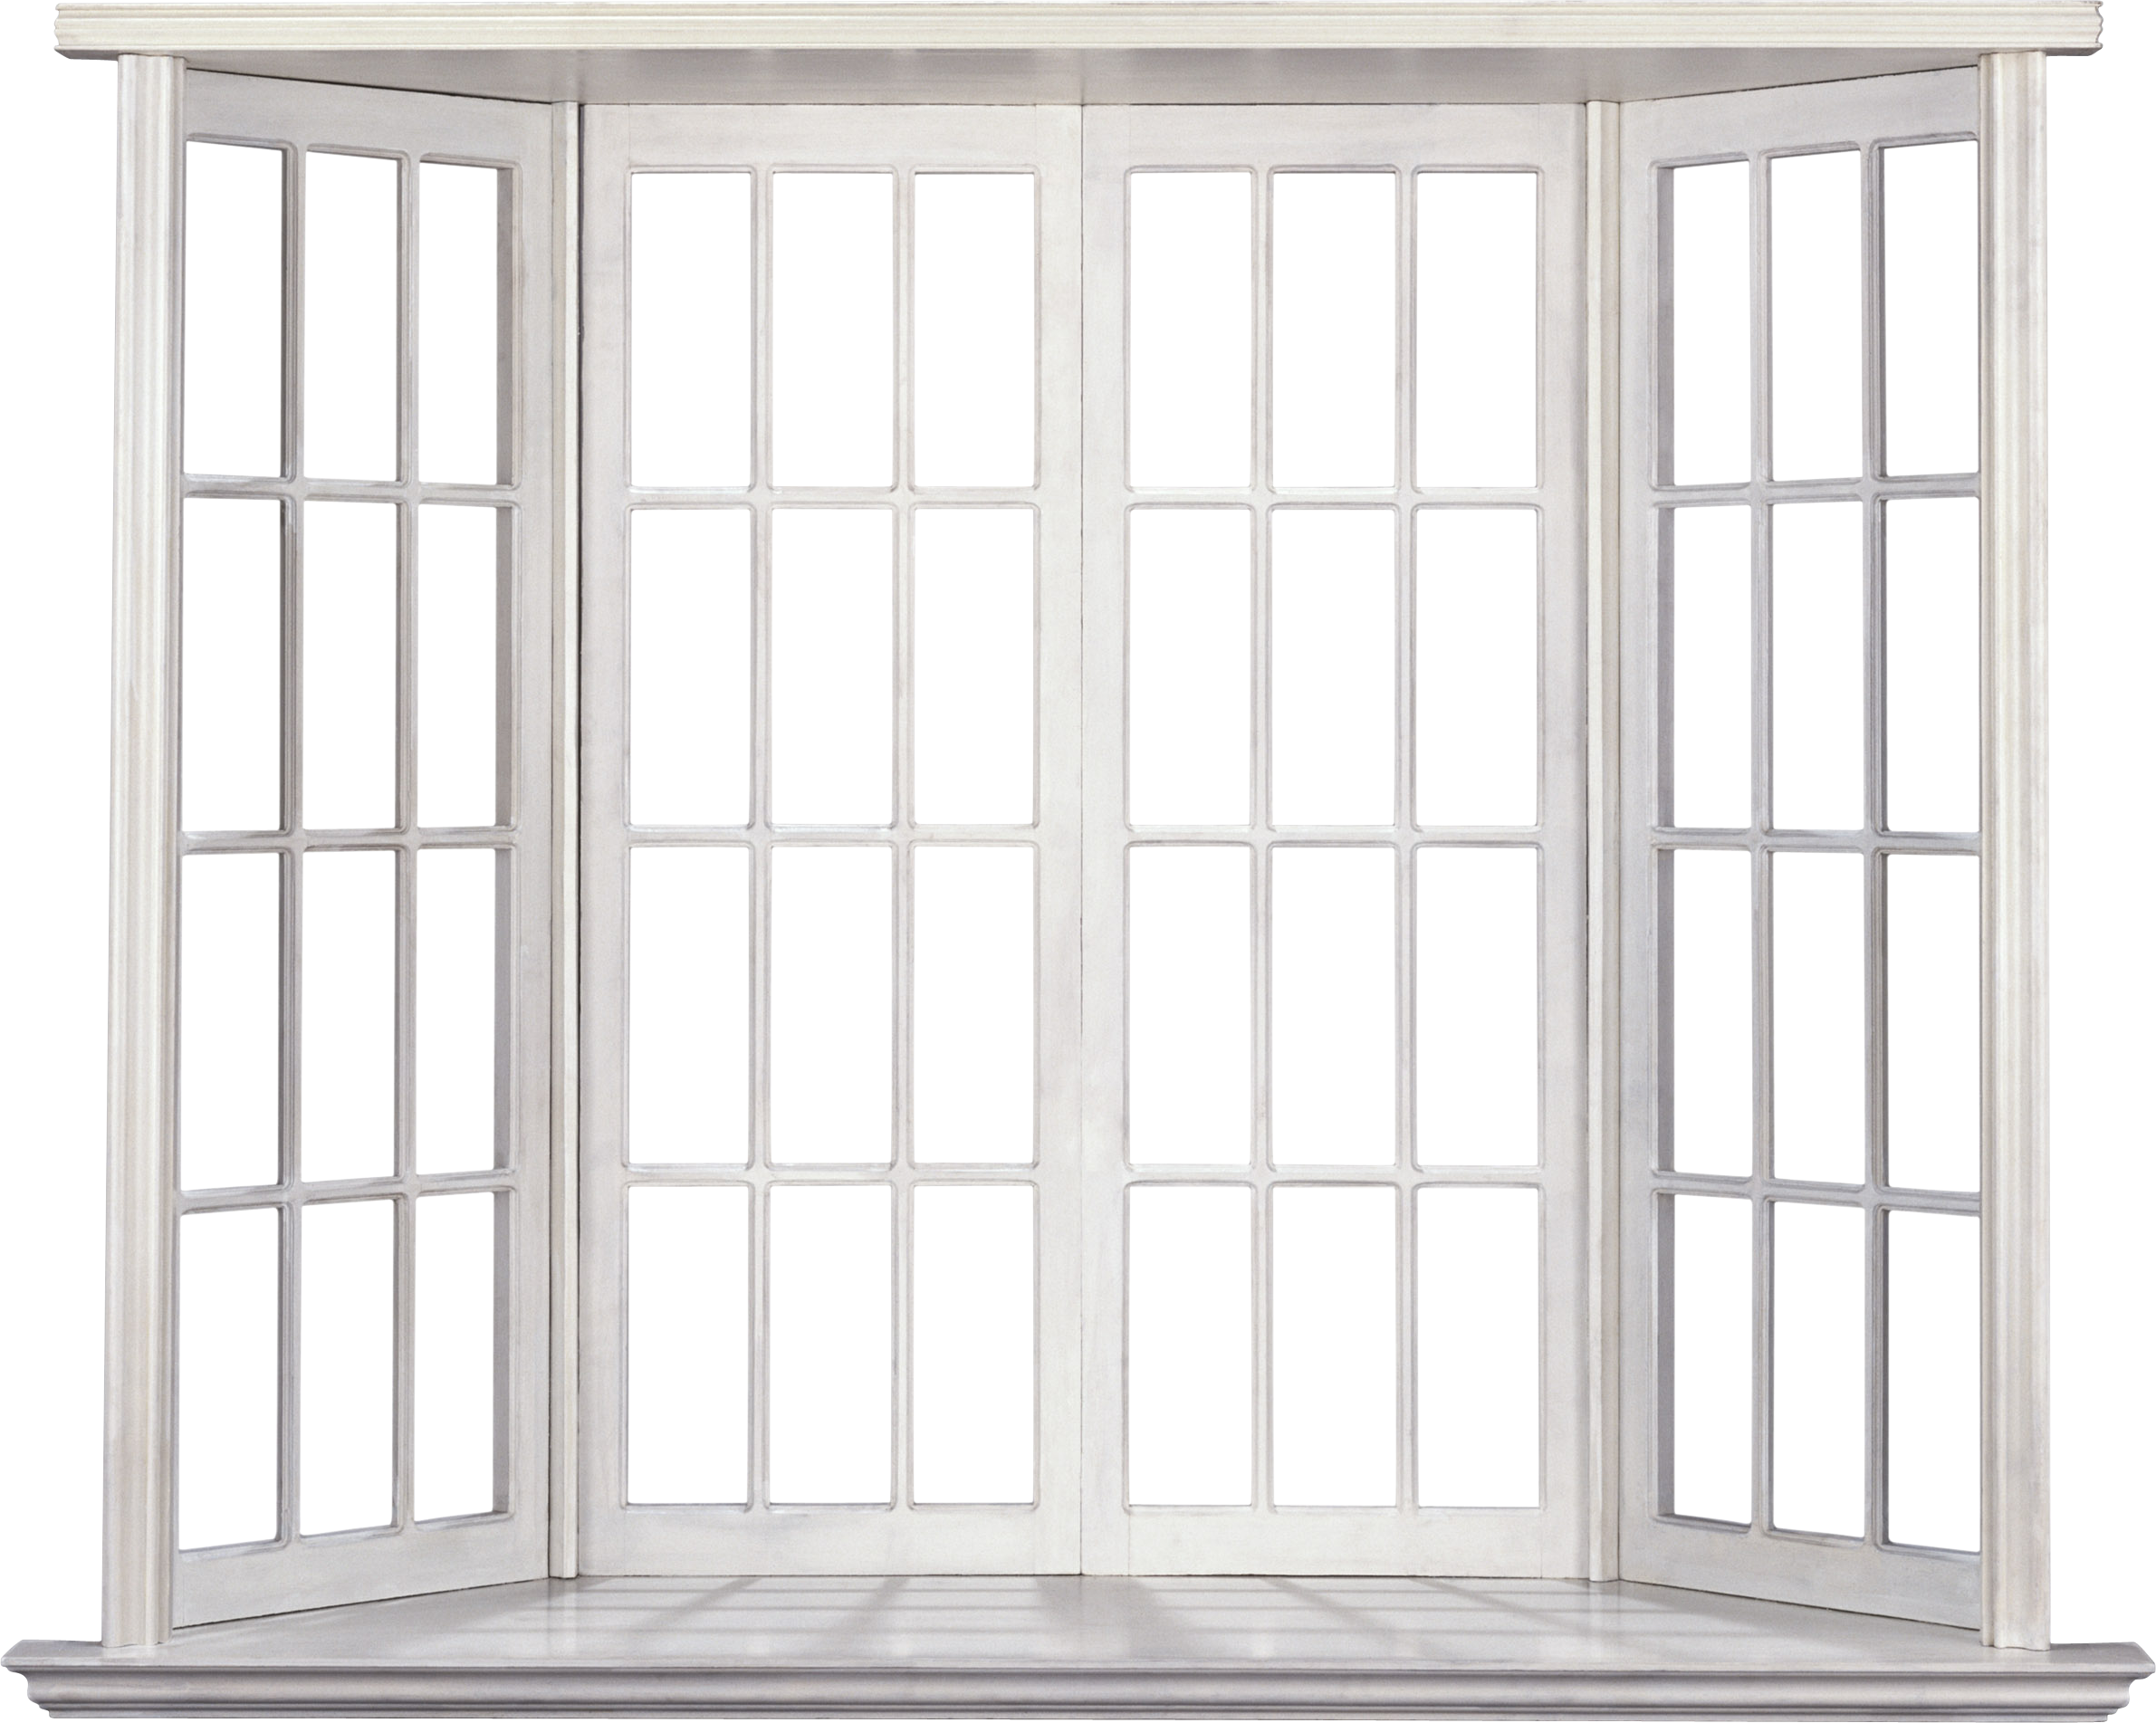 Window PNG